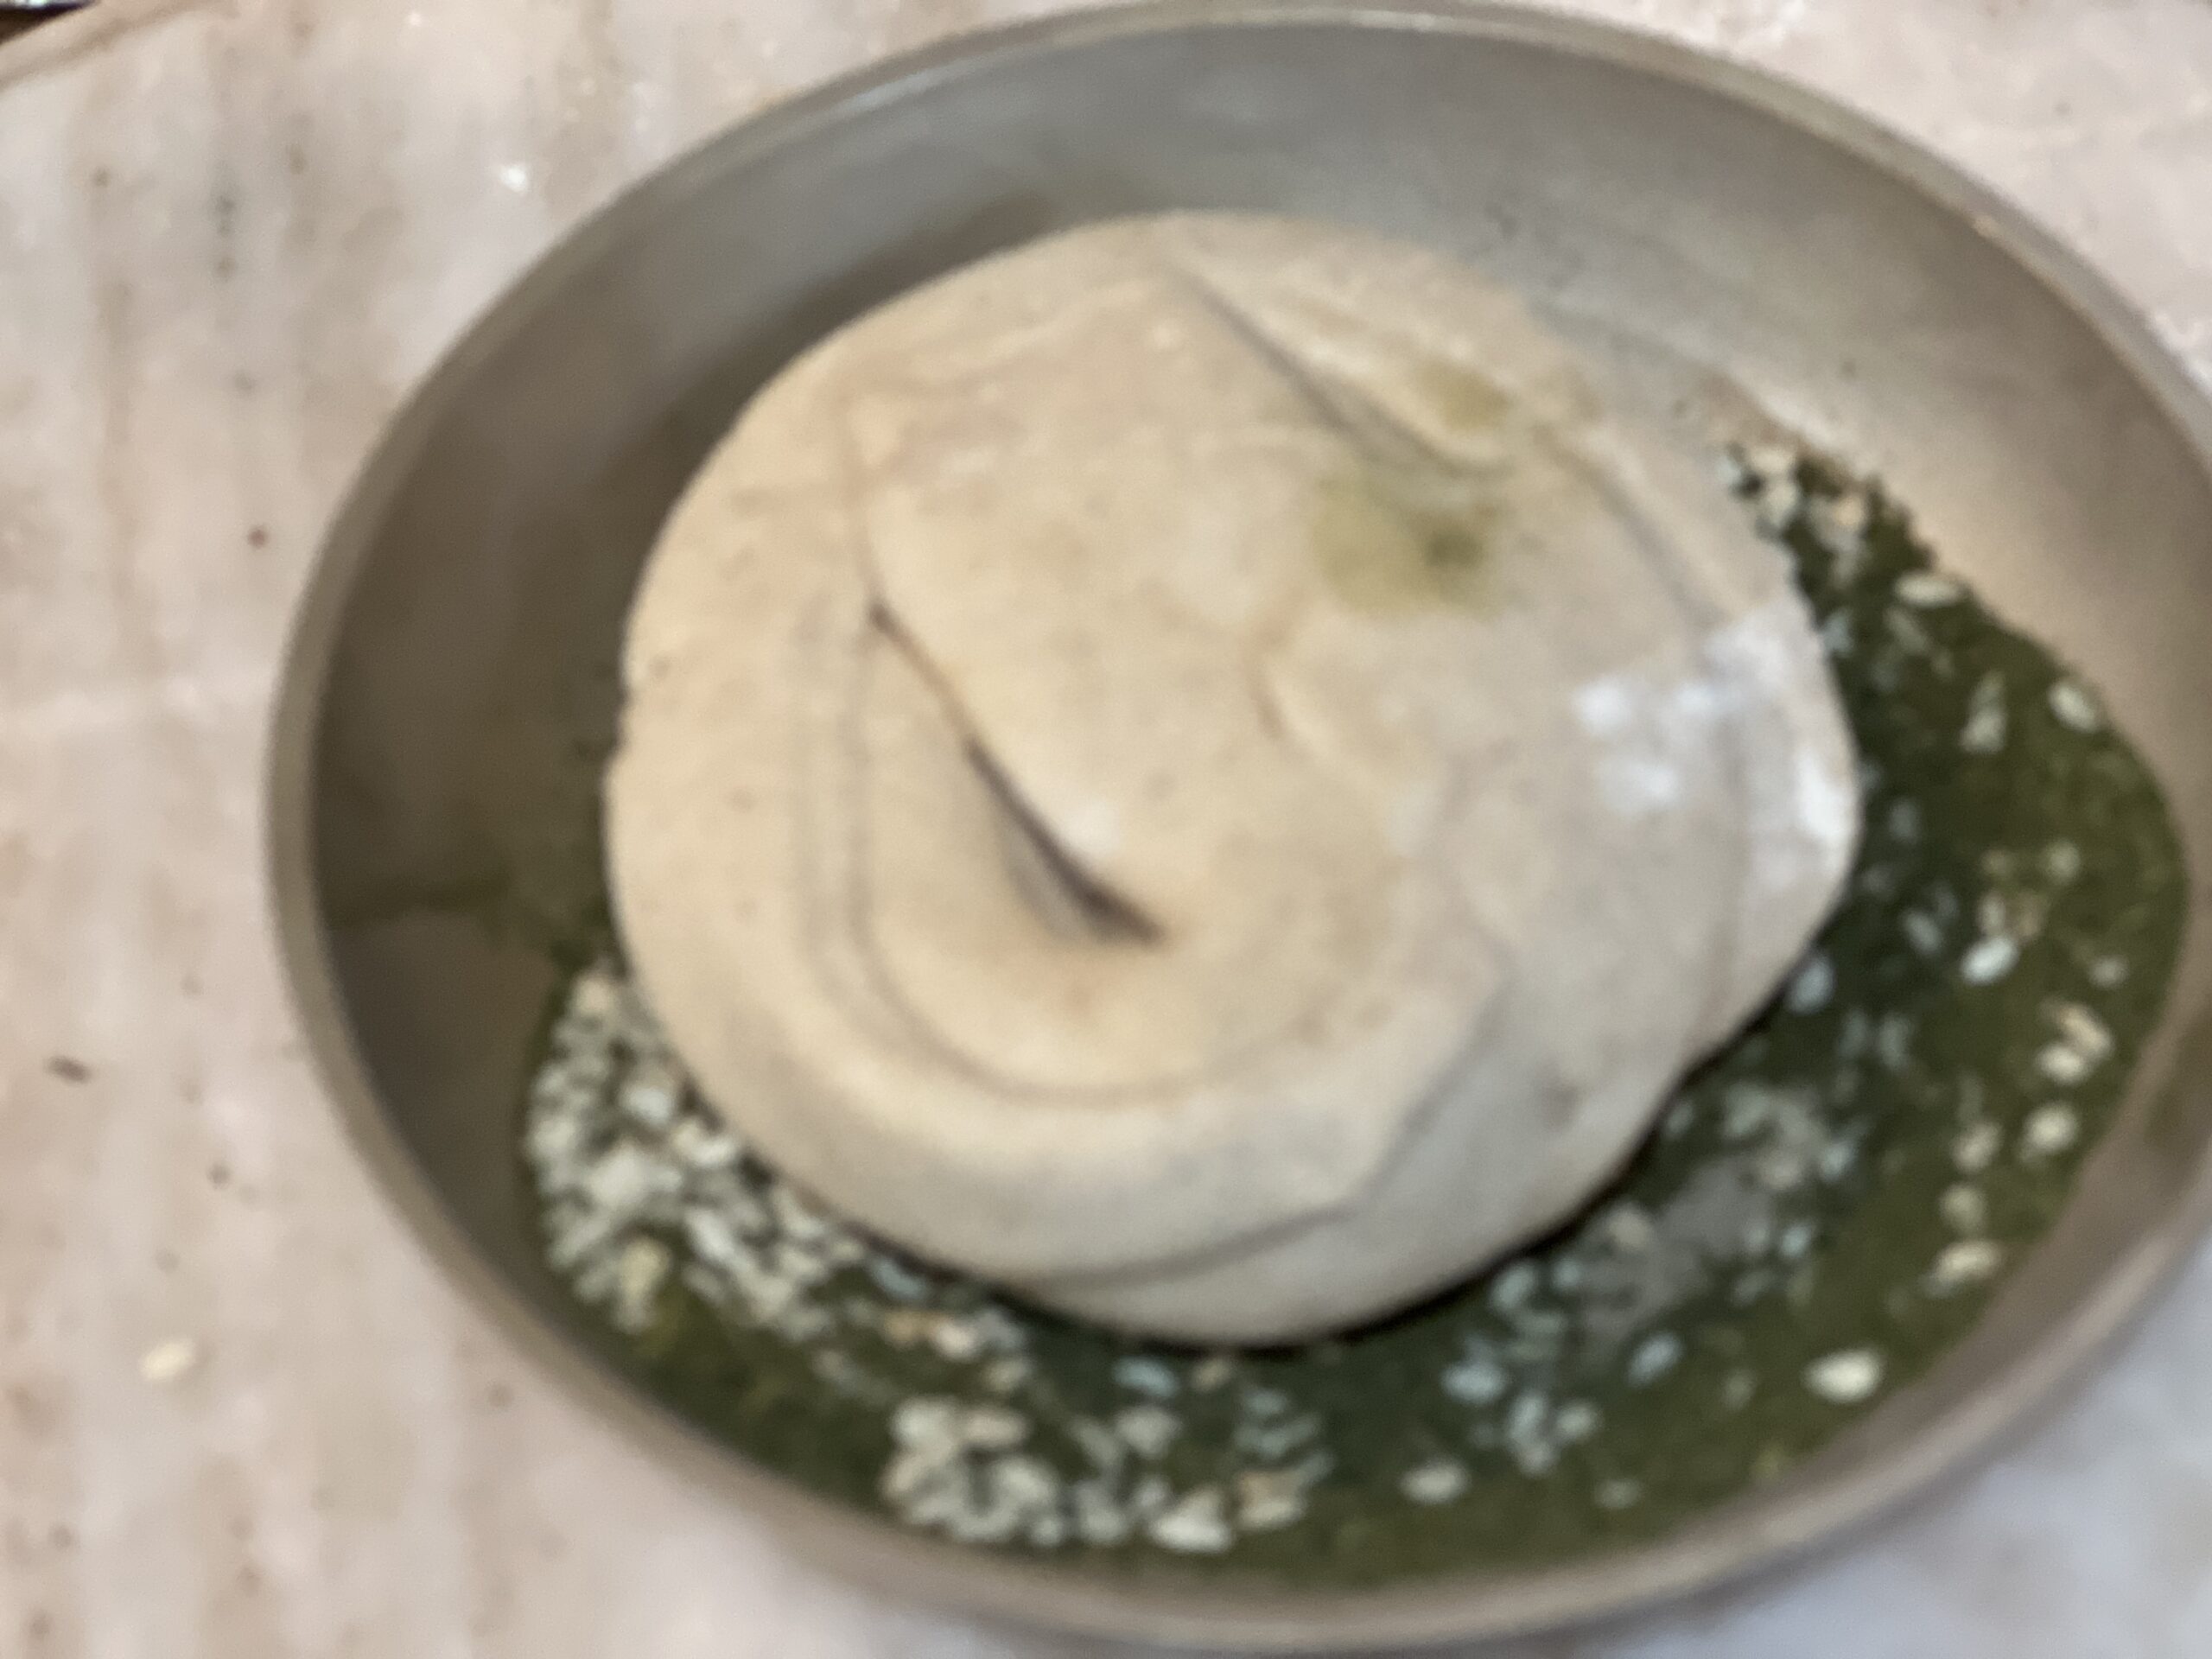 Mint and Sesame Lachha Paratha Recipe